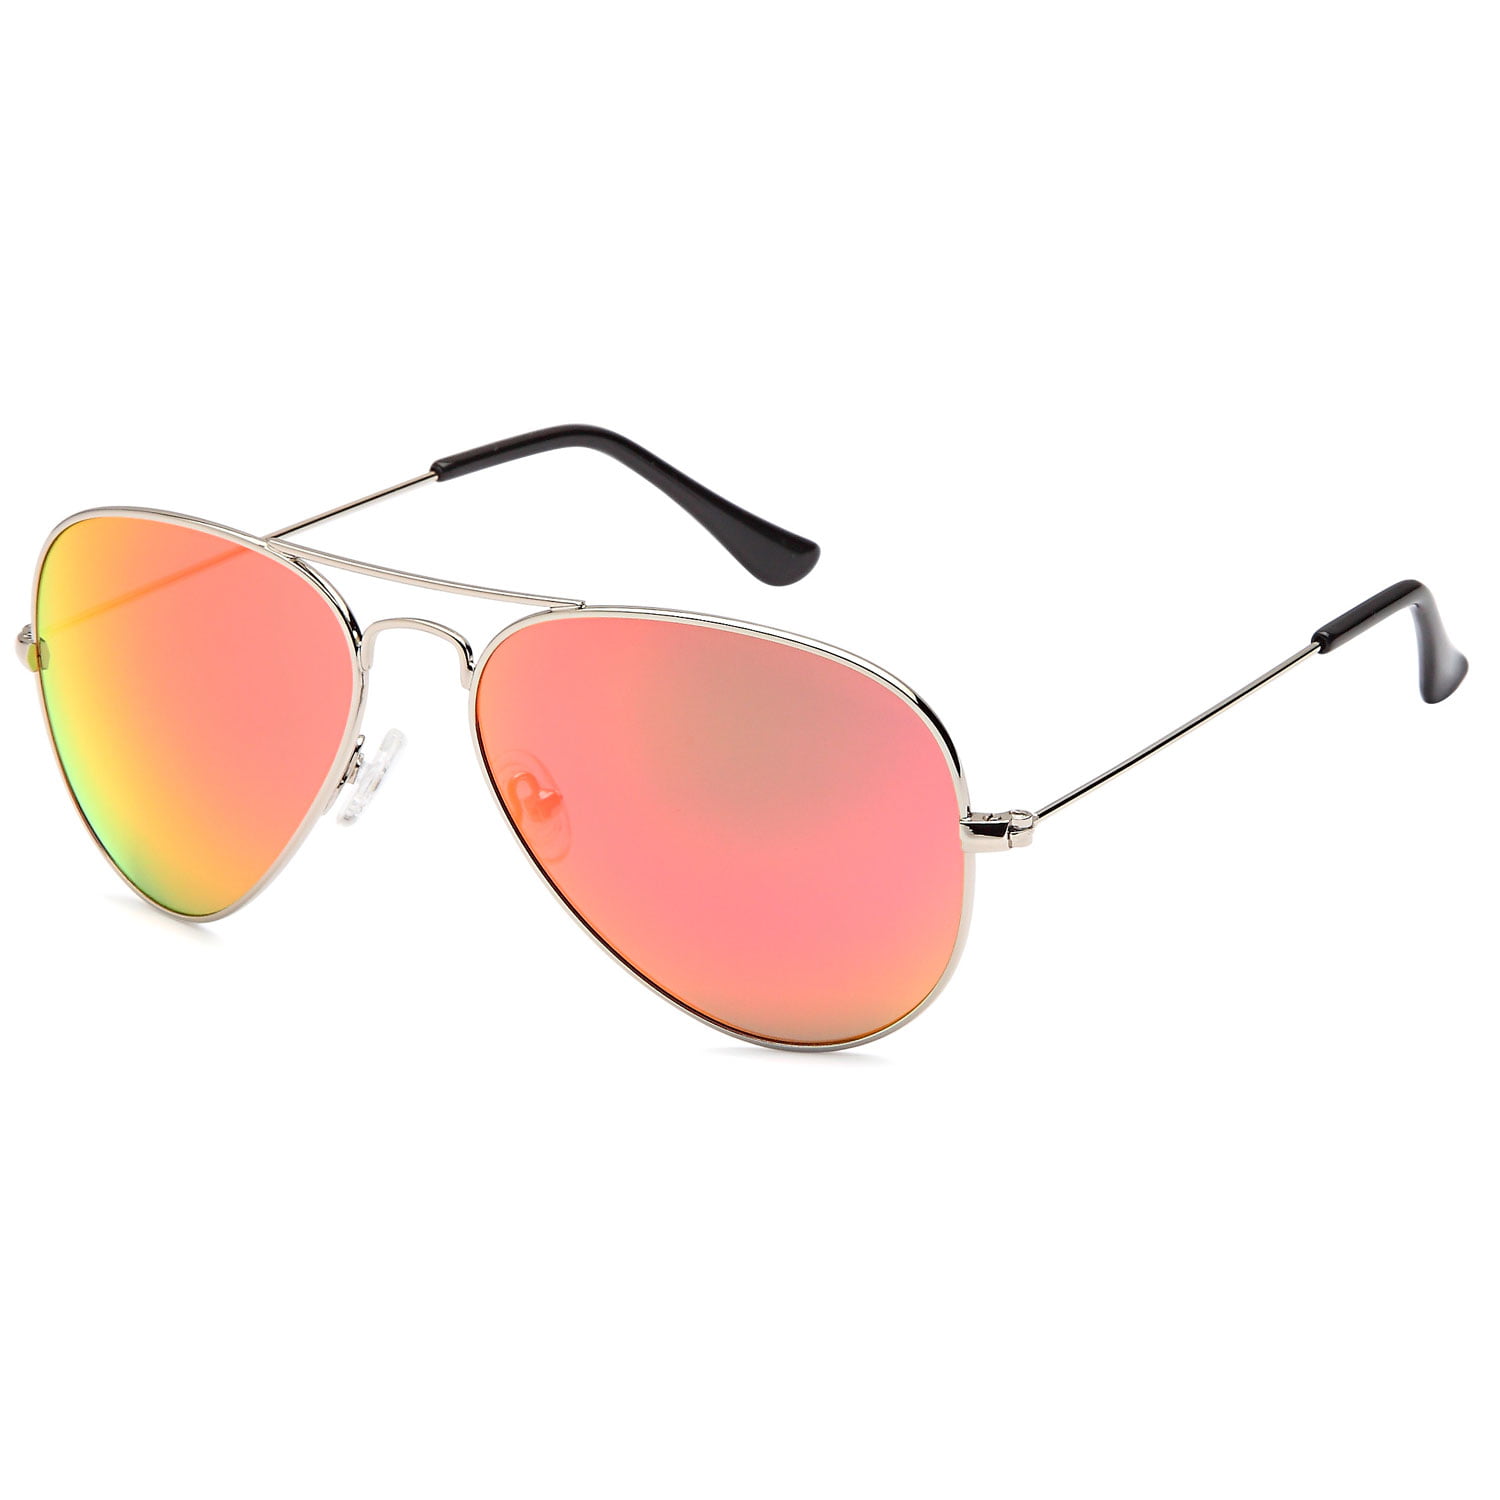 Sunglasses Polycarbonate Lenses Classic Aviator Style 100% UV400 Driving Lens